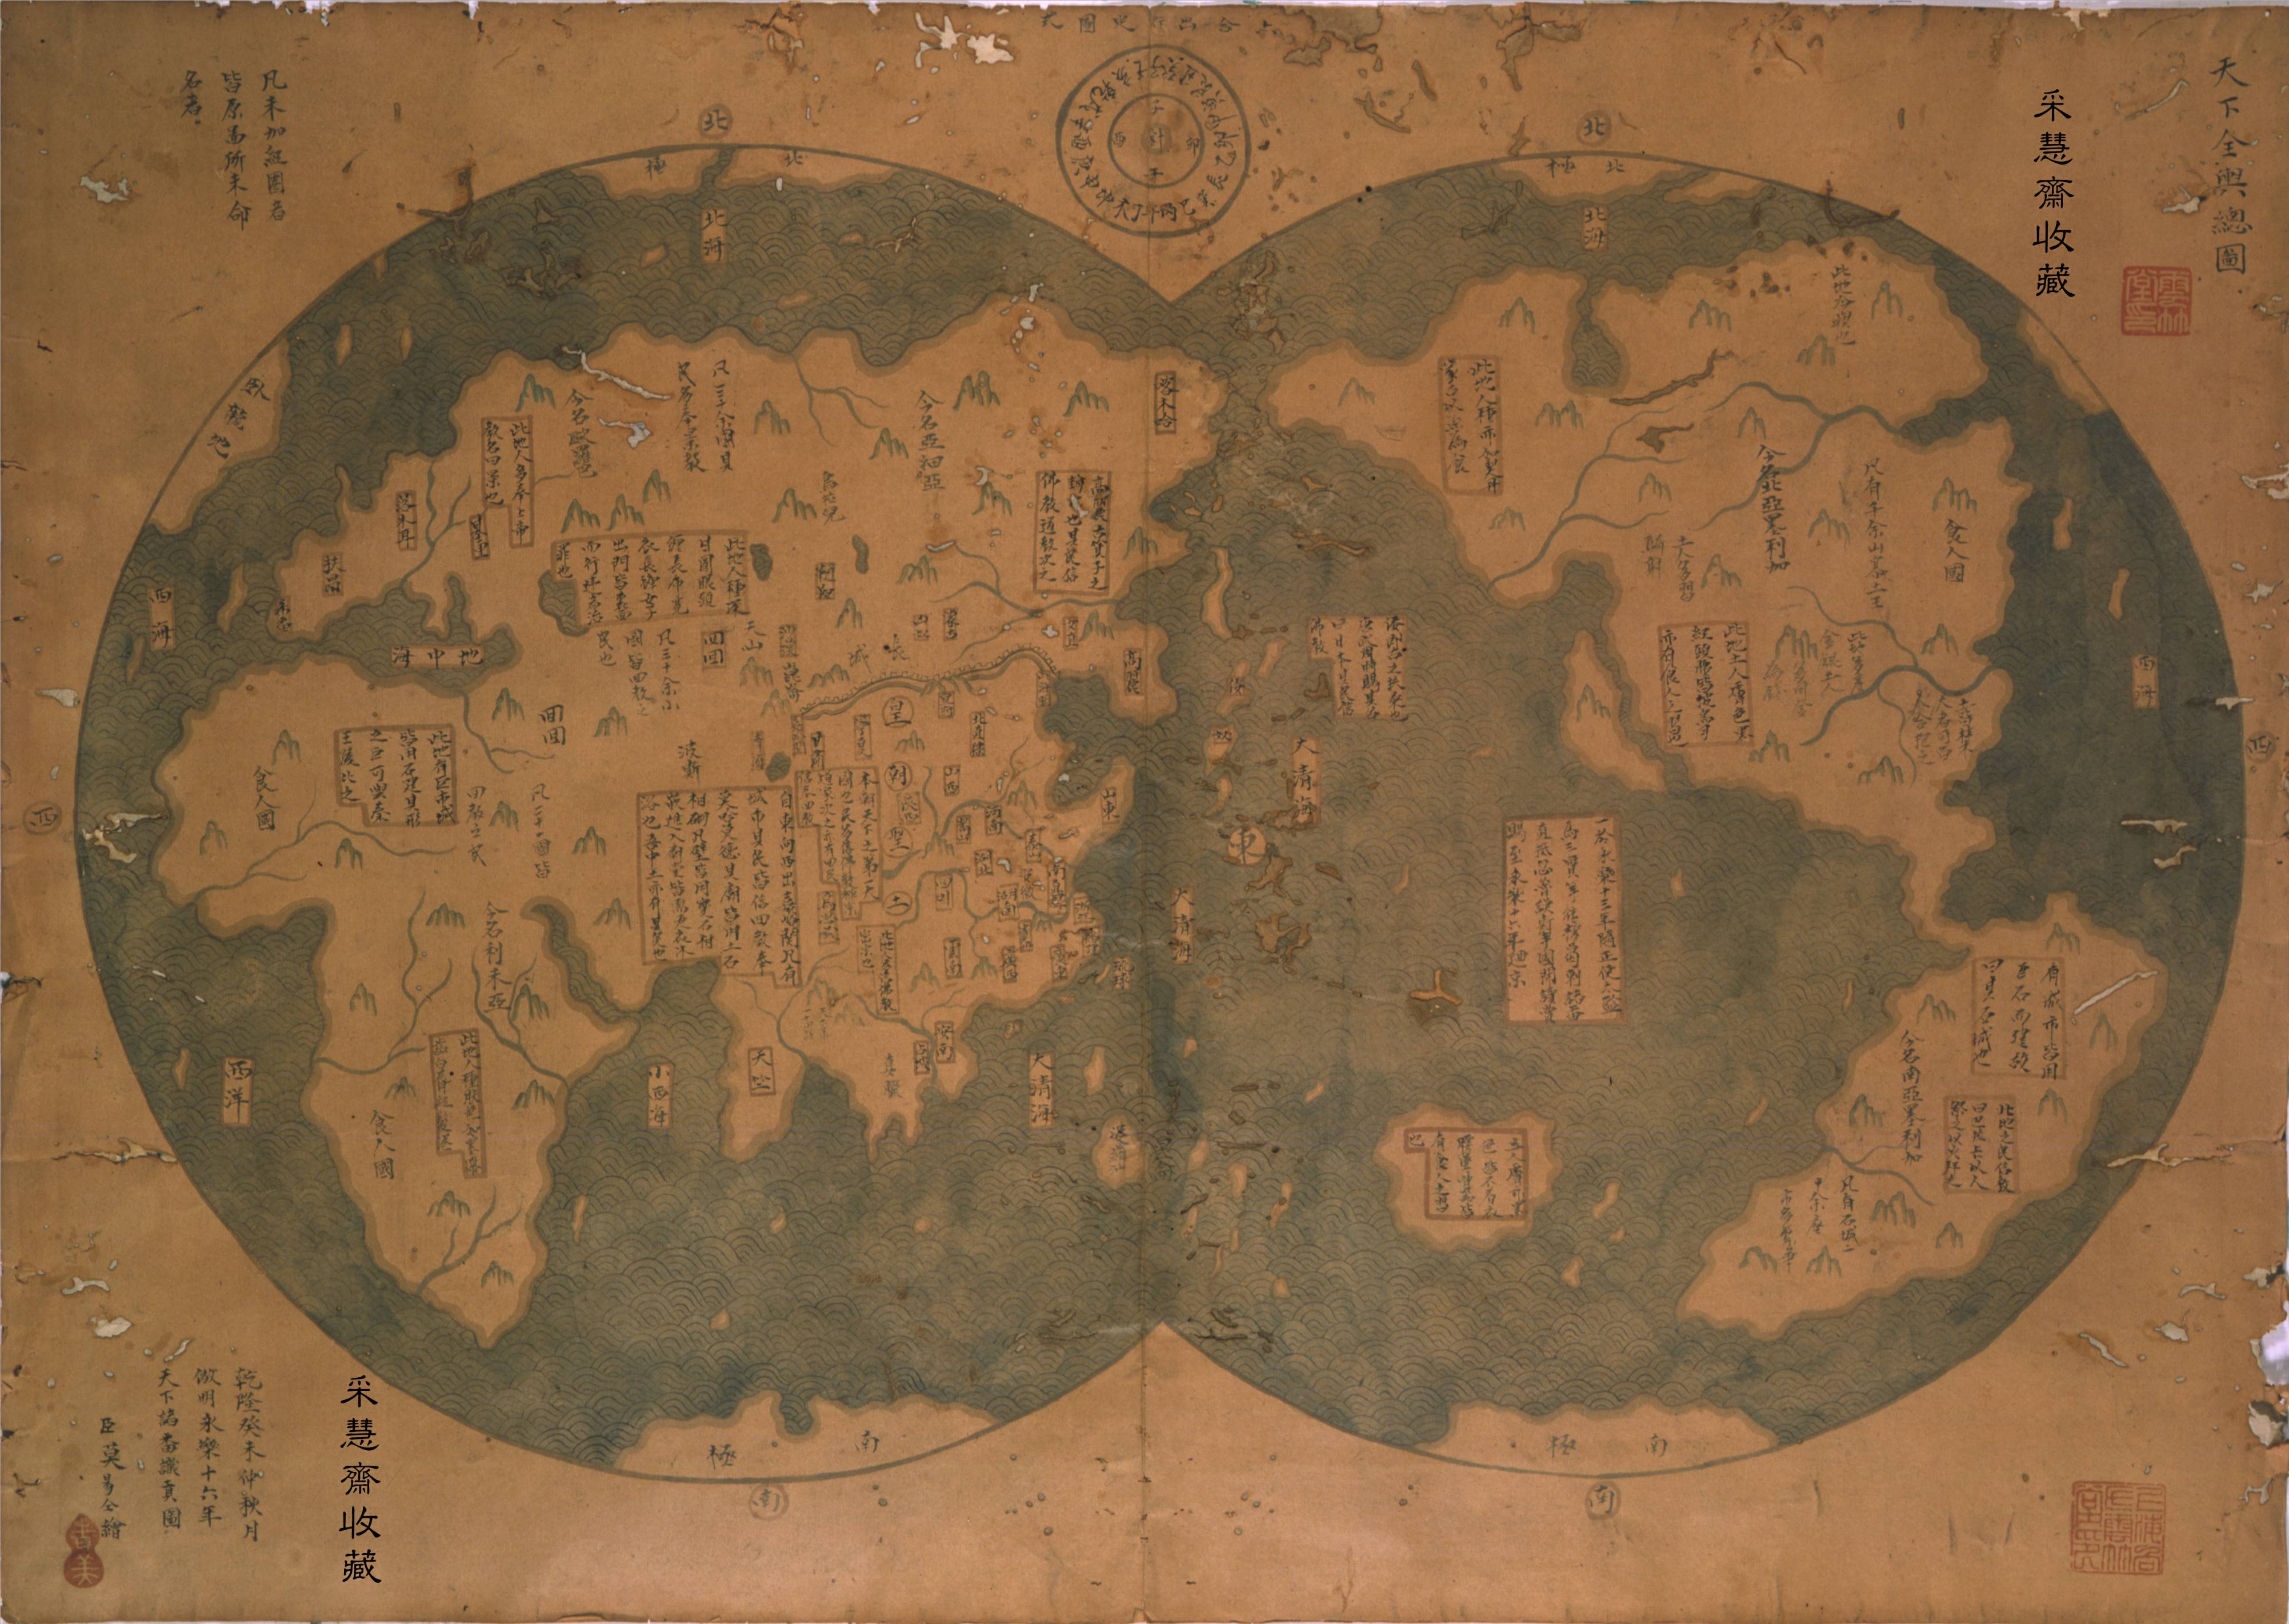 poseidon master of atlantis world map